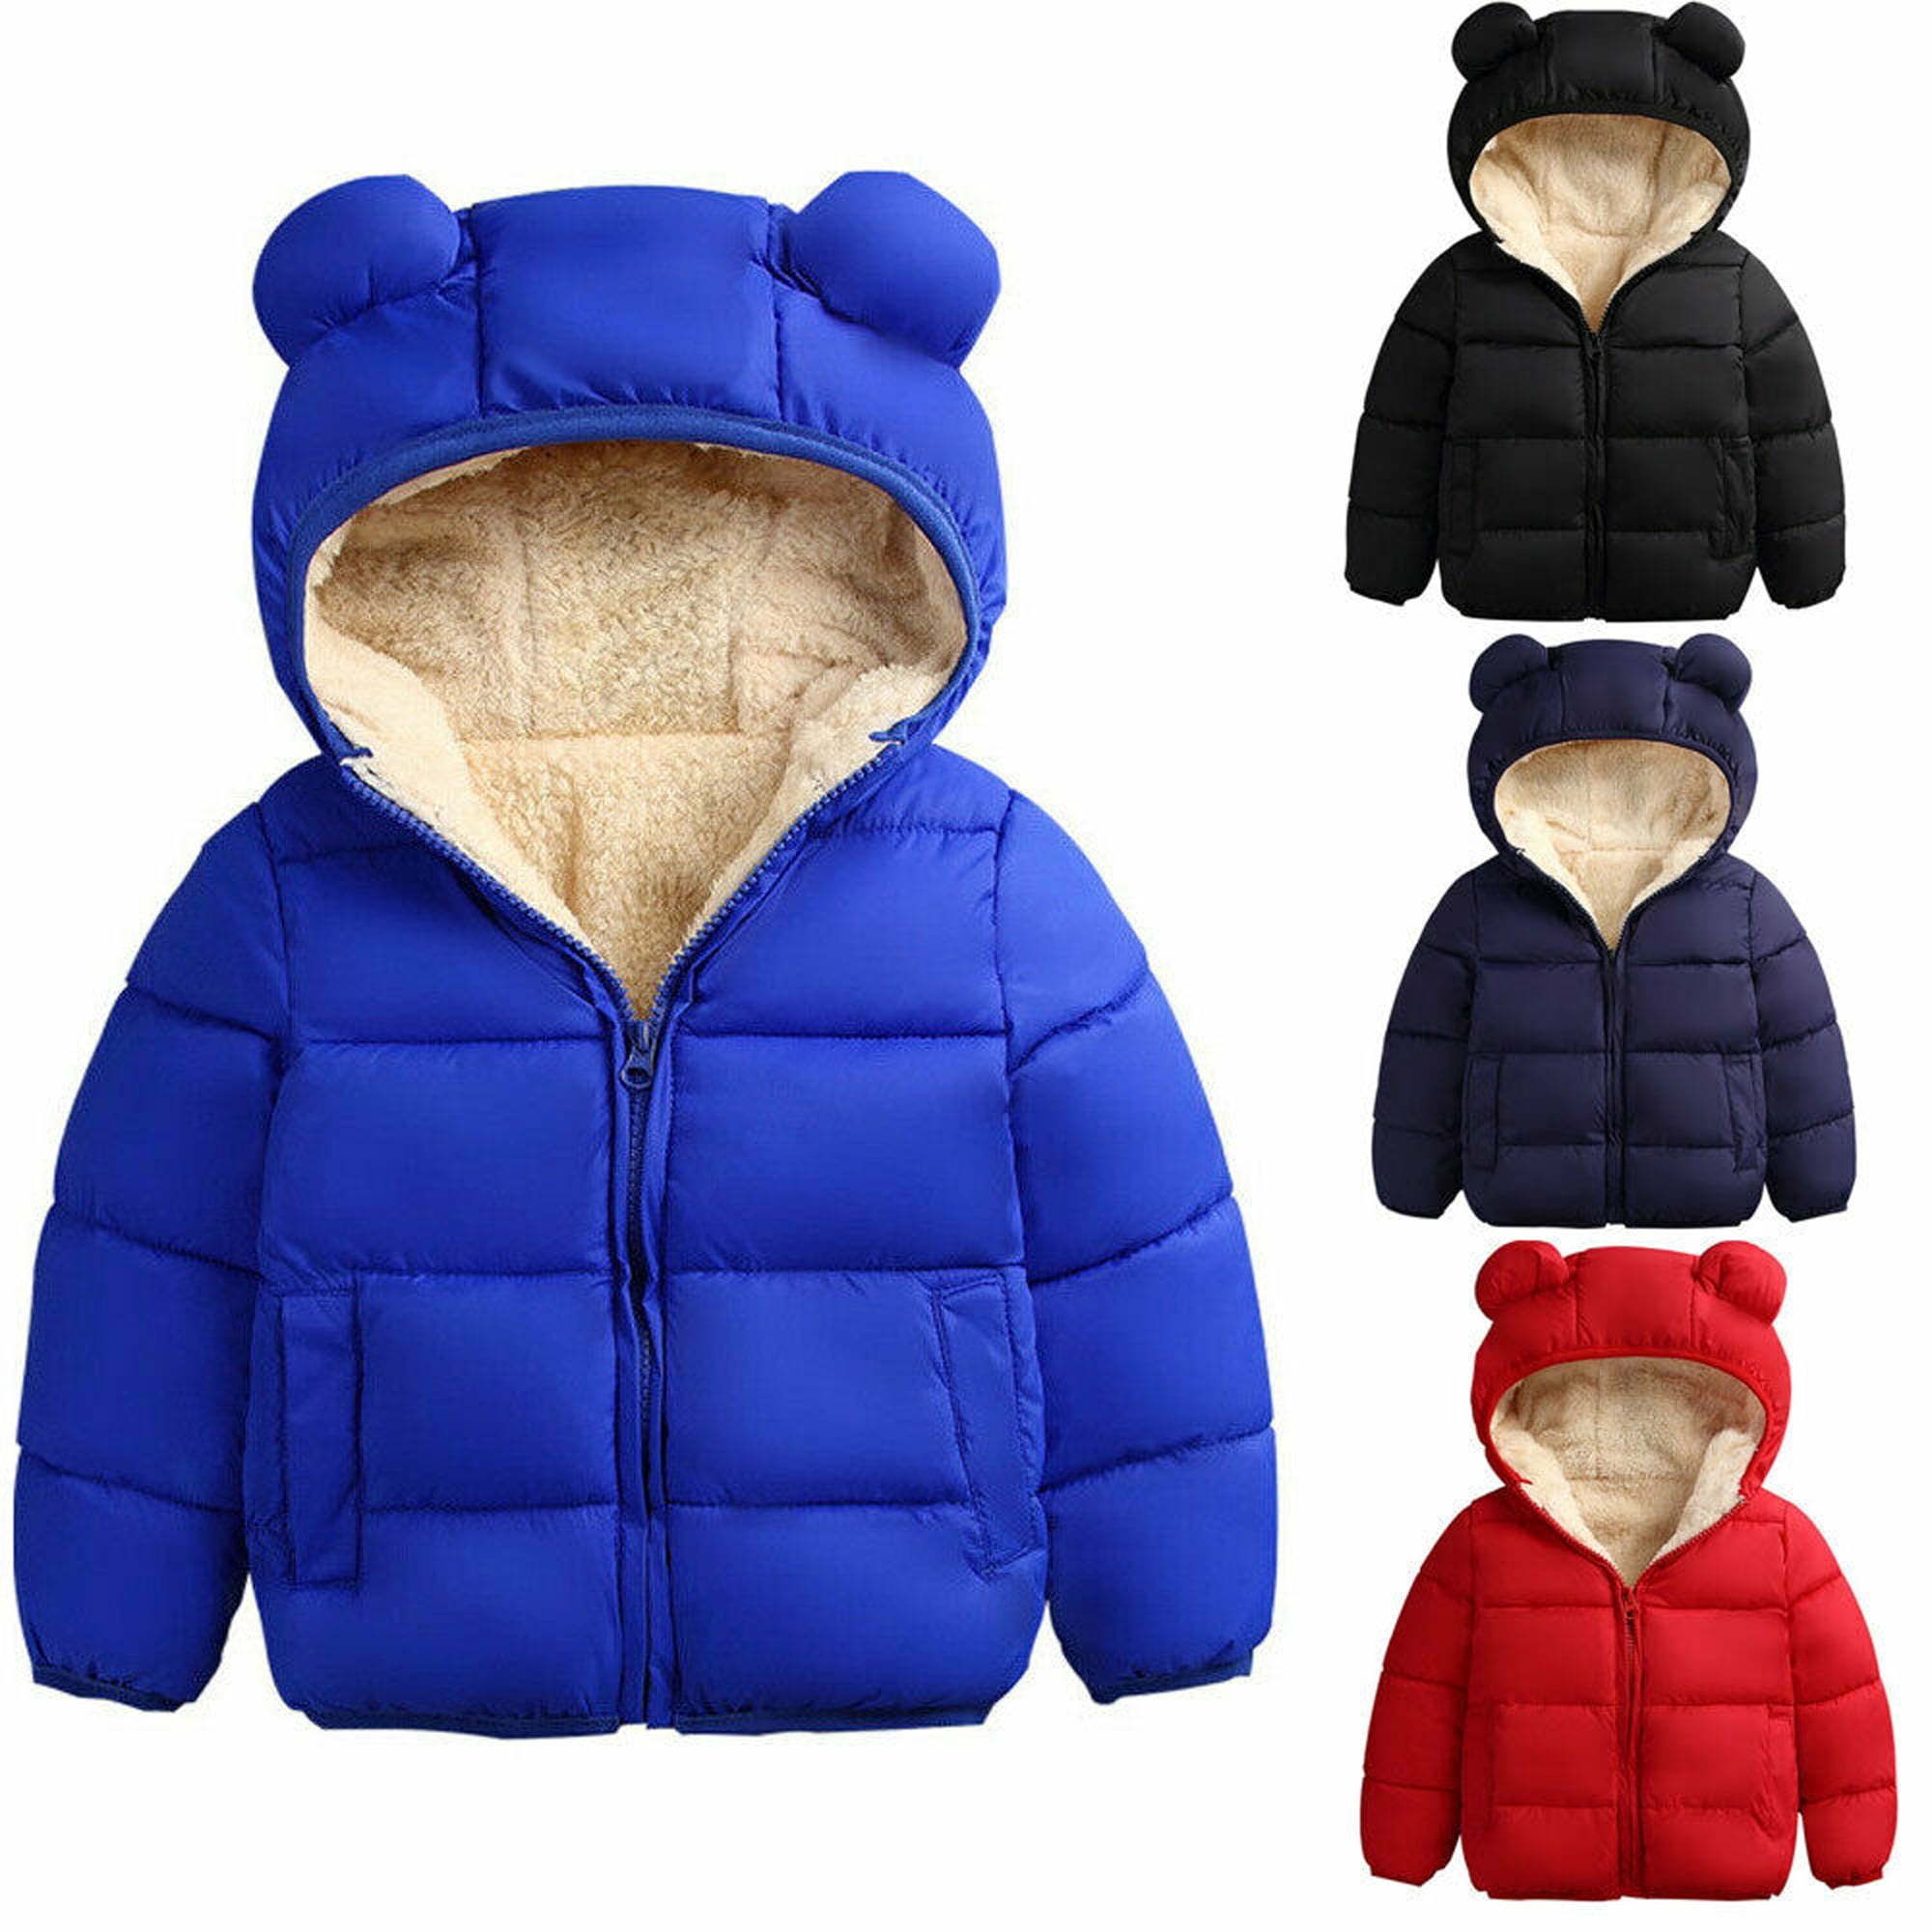 Lifestyler Fashion Girl Cartoon Ear Hooded Pullover Casual Winter Warm Clothes Coat Zipper Regular Jacket